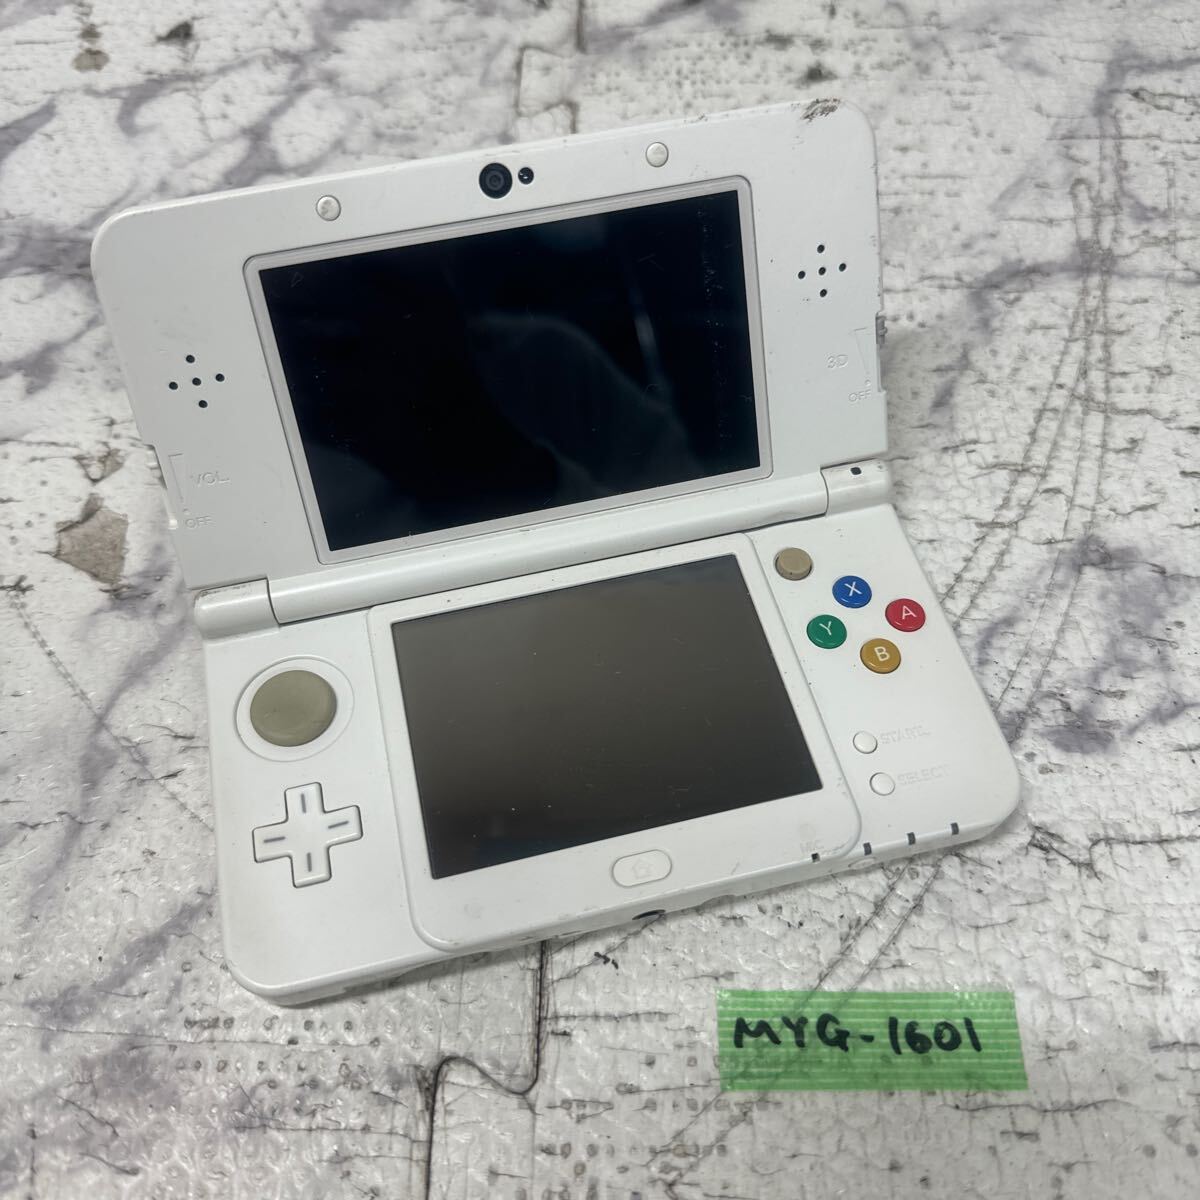 MYG-1601 激安 ゲー厶機 本体 New Nintendo 3DS 動作未確認 ジャンク 同梱不可の画像1